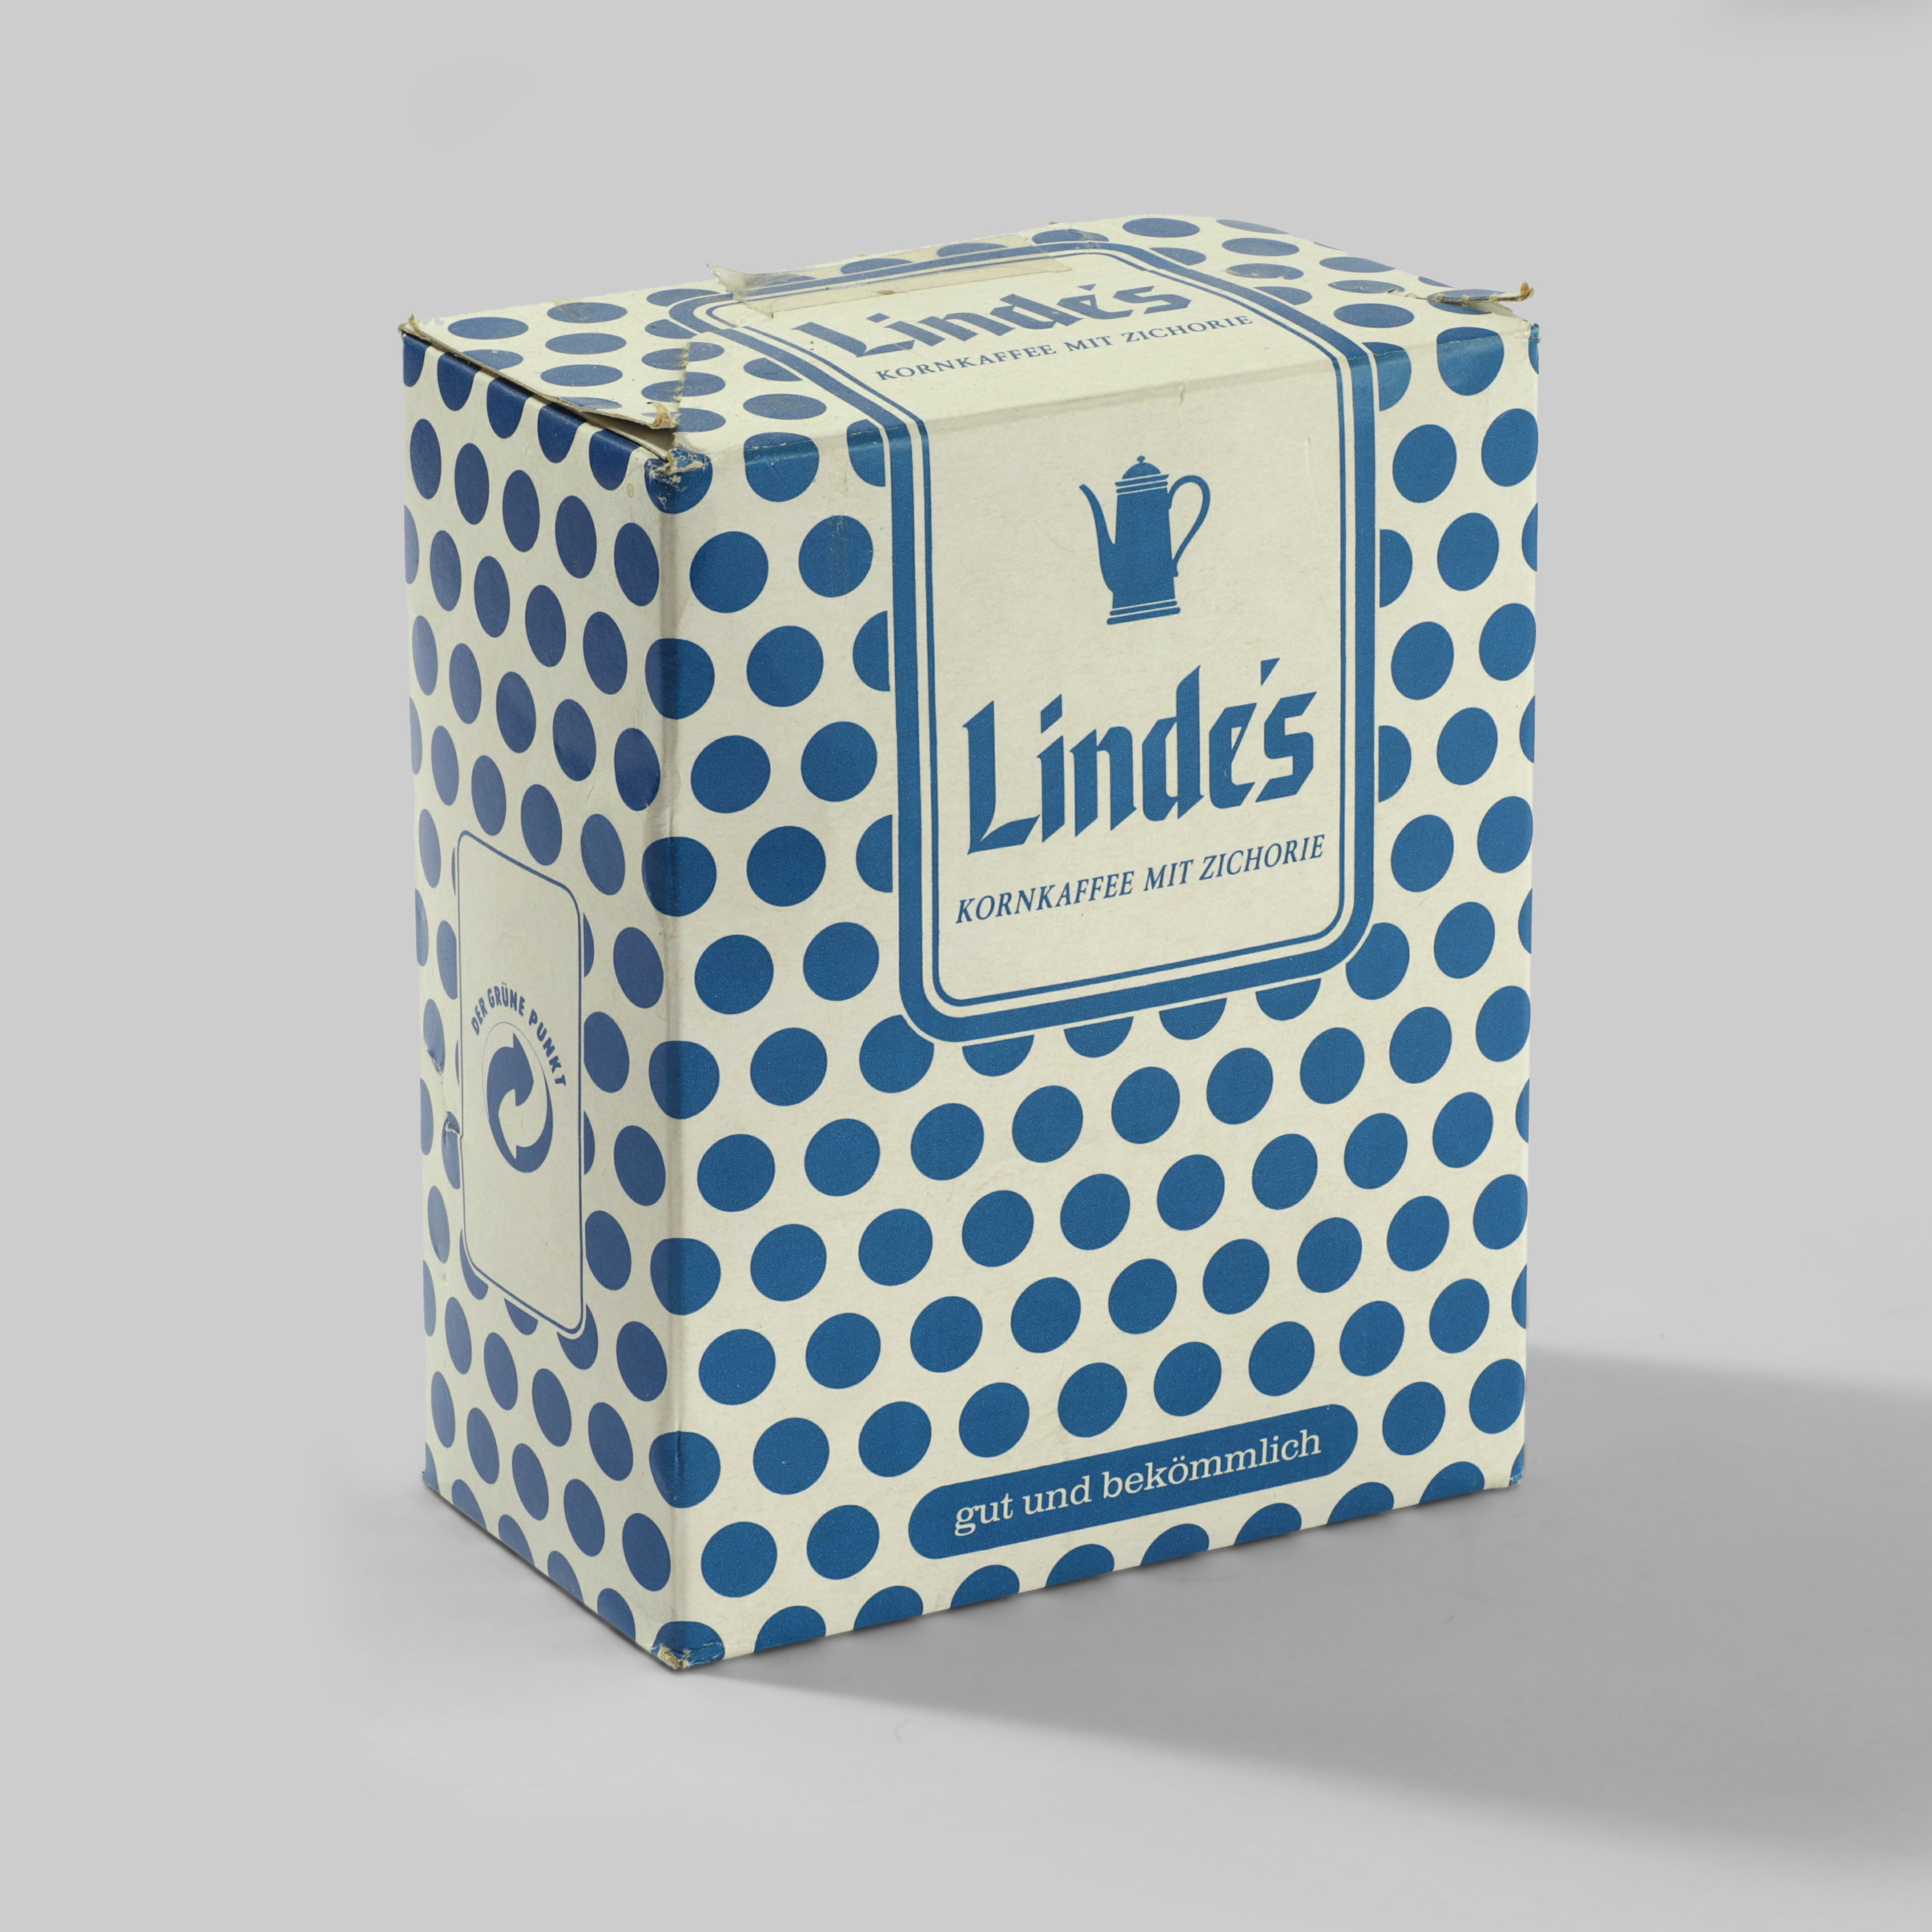 Lindes - Originalpackung mit Kornkaffee aus Zichorie (Michael Papenberg CC BY-NC-SA)